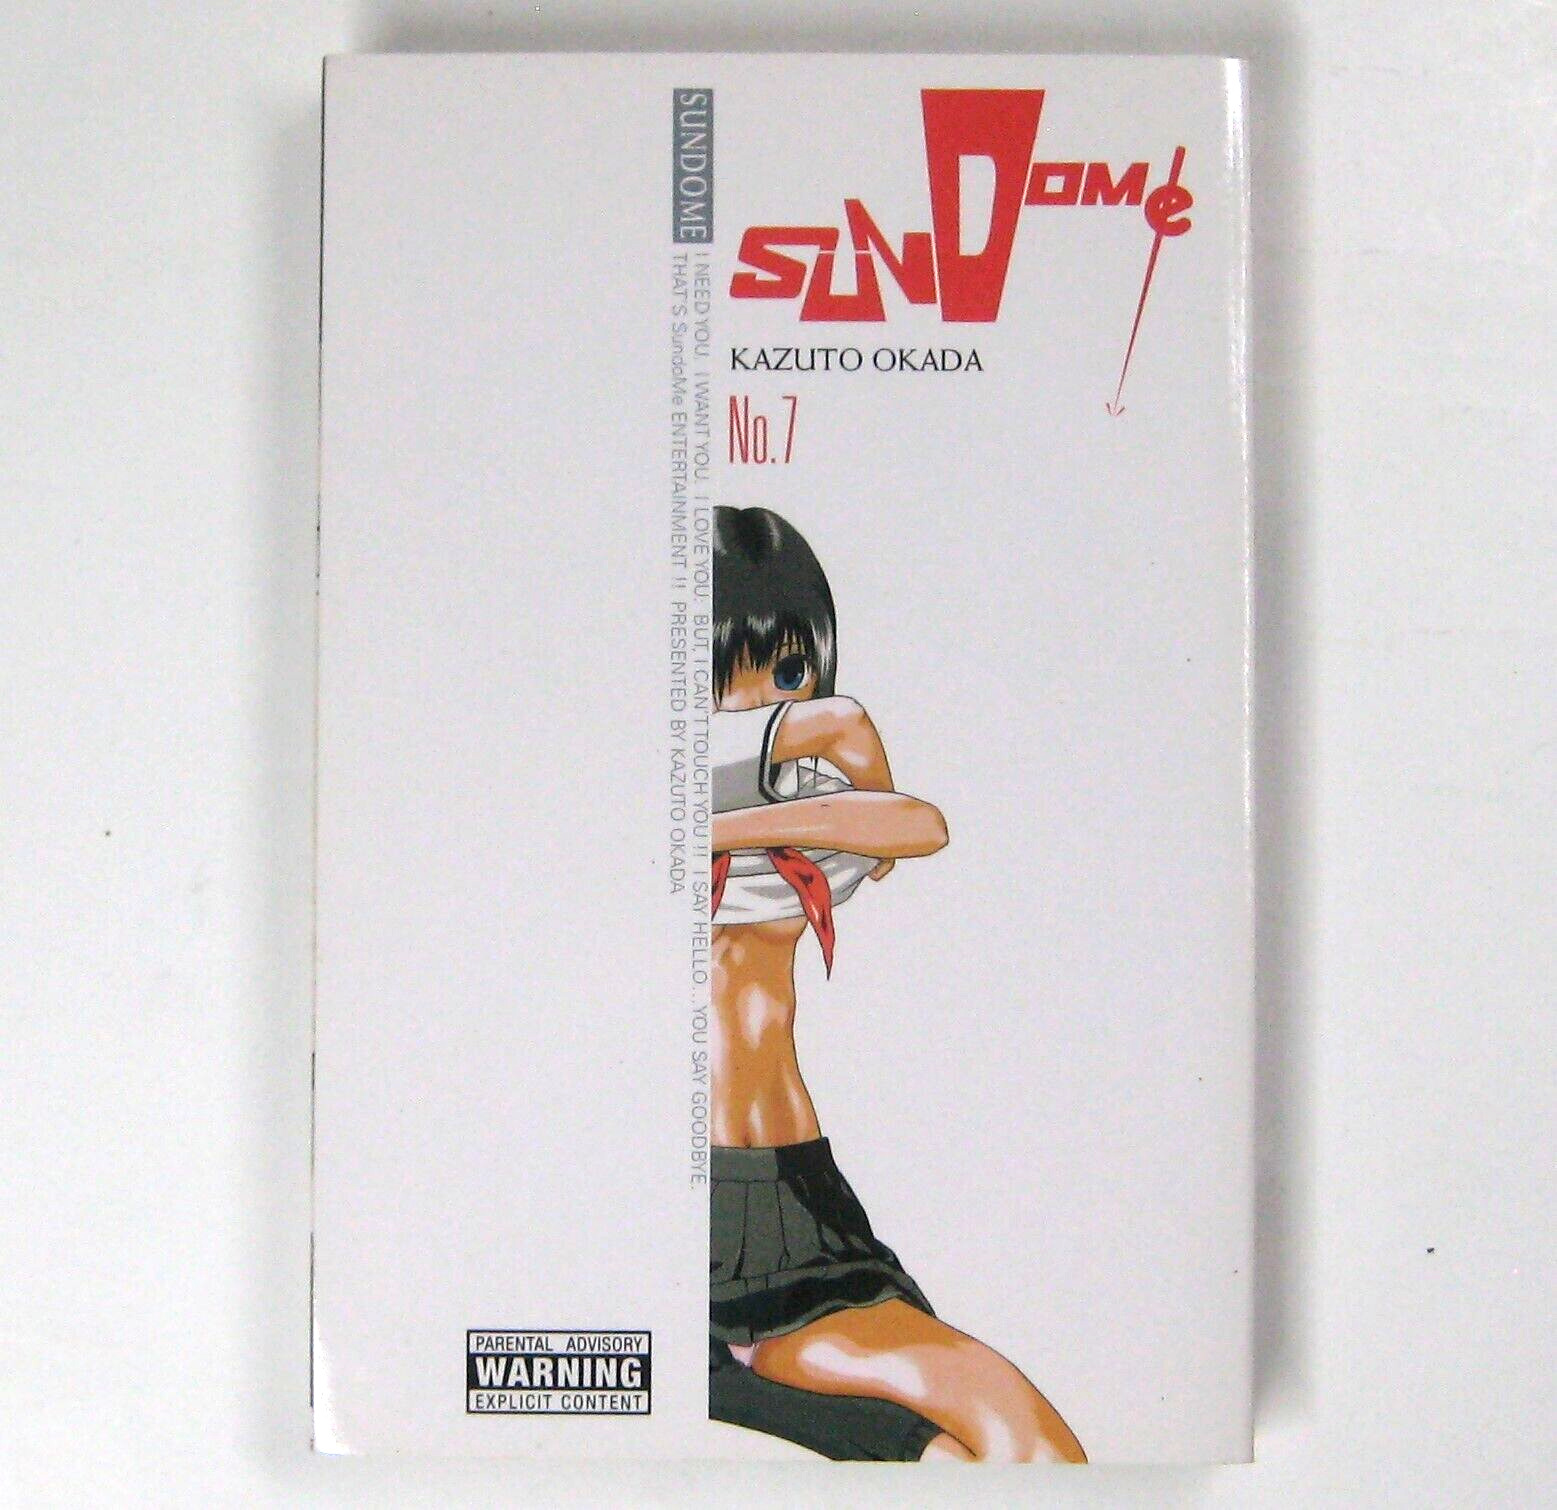 Sundome Vol. 7 Kazuto Okada Softcover No. 7 English Manga Explicit Content